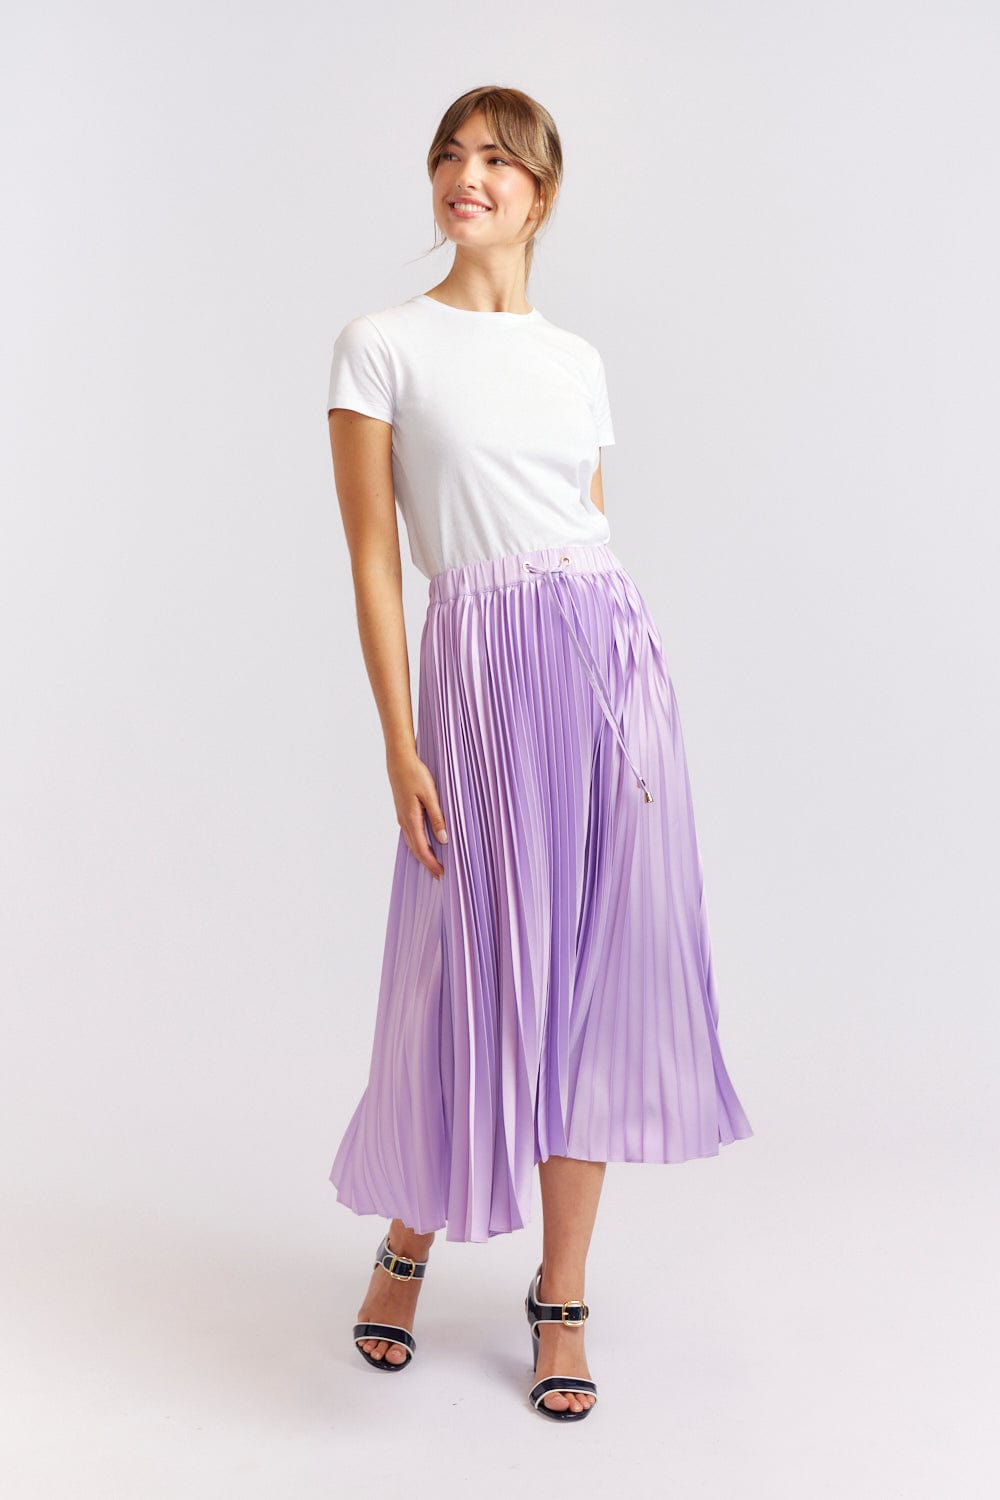 Alessandra Cosmos Pleated Skirt in Lavender Purple